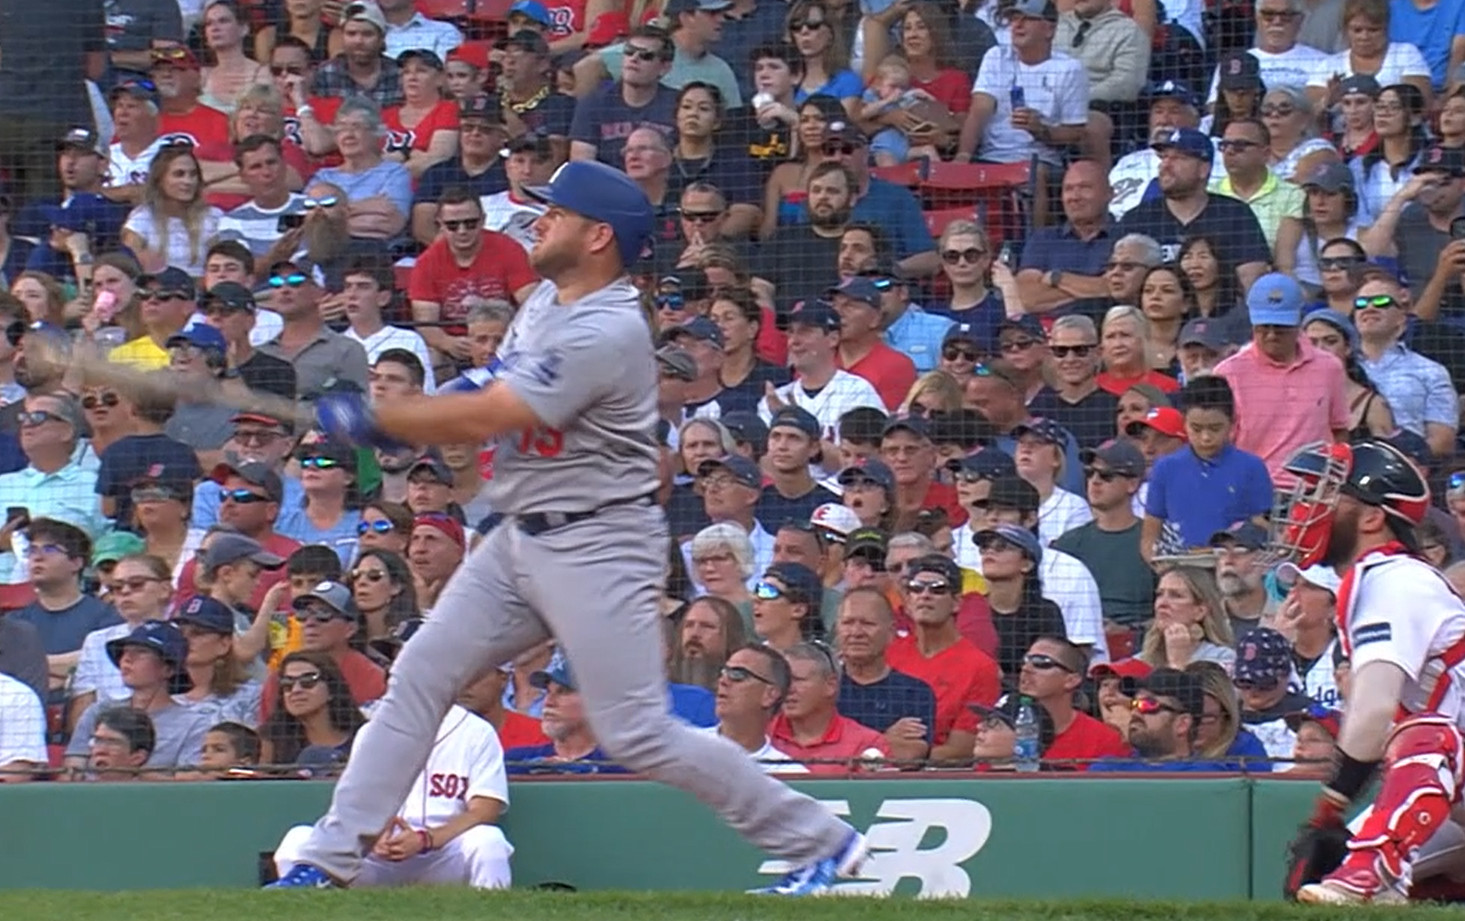 Adam Duvall hits 3-run homer as Boston Red Sox top Los Angeles Dodgers 8-5